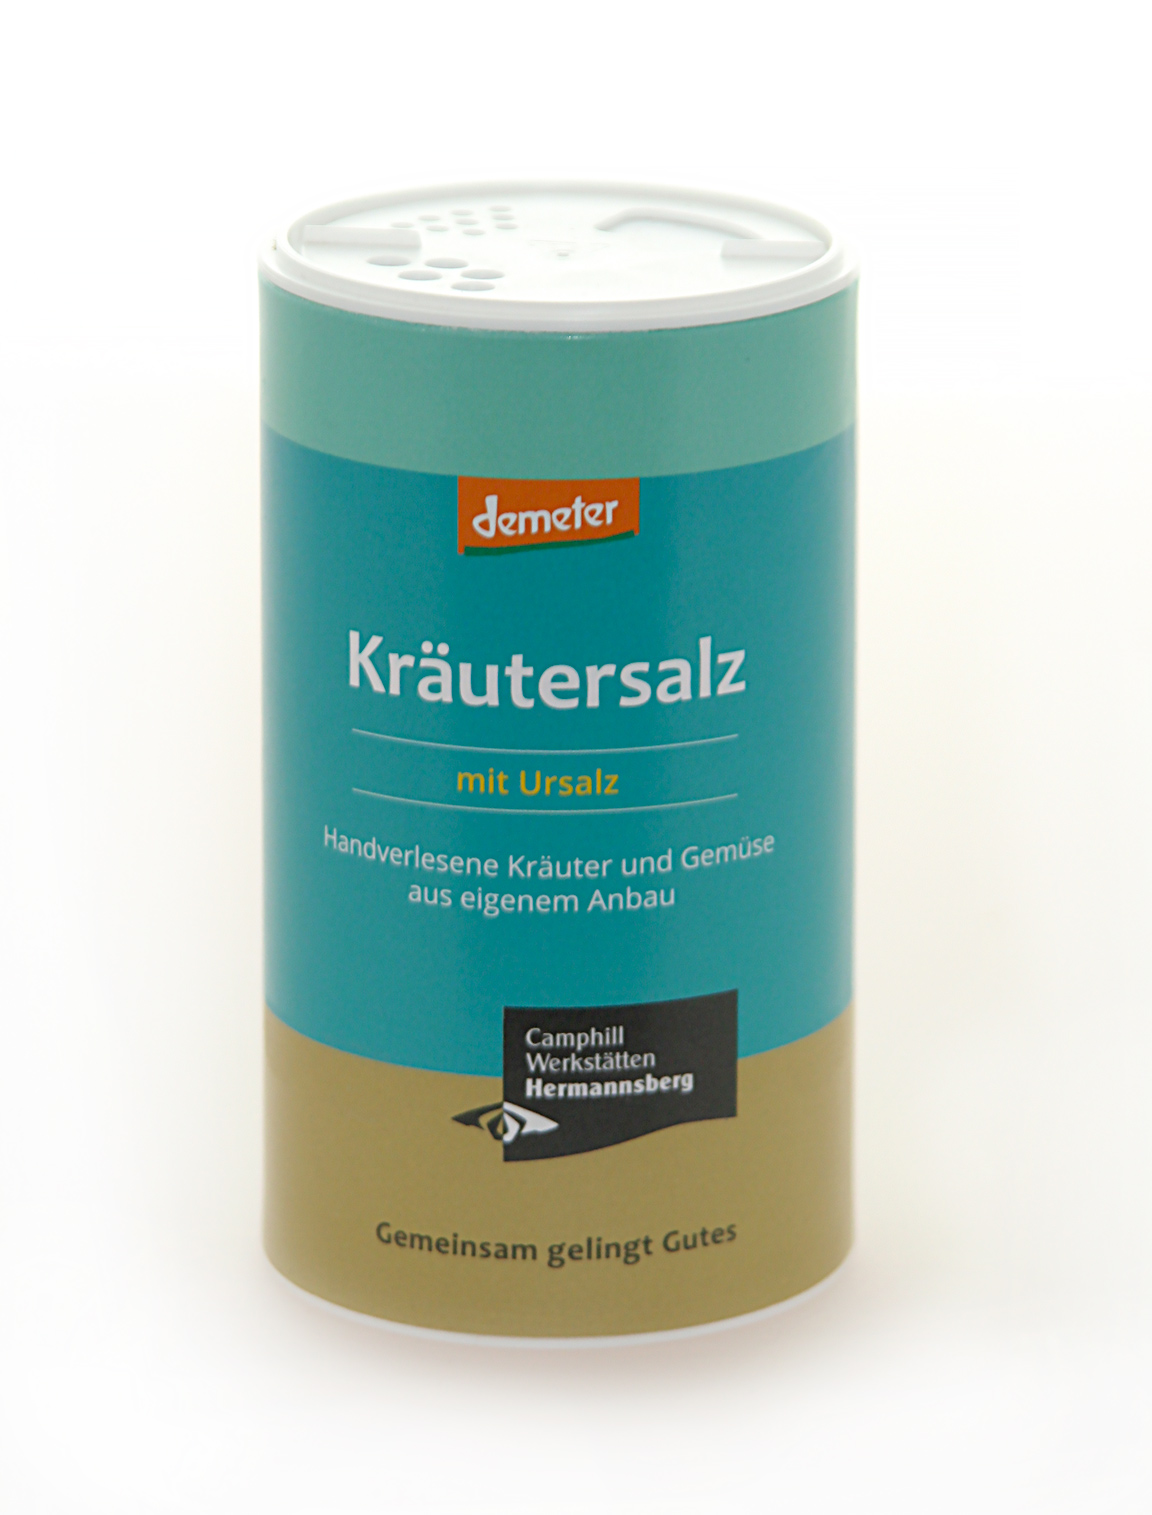 Demeter Kräutersalz aus Ursalz Streudose Nachfüllbar 150g